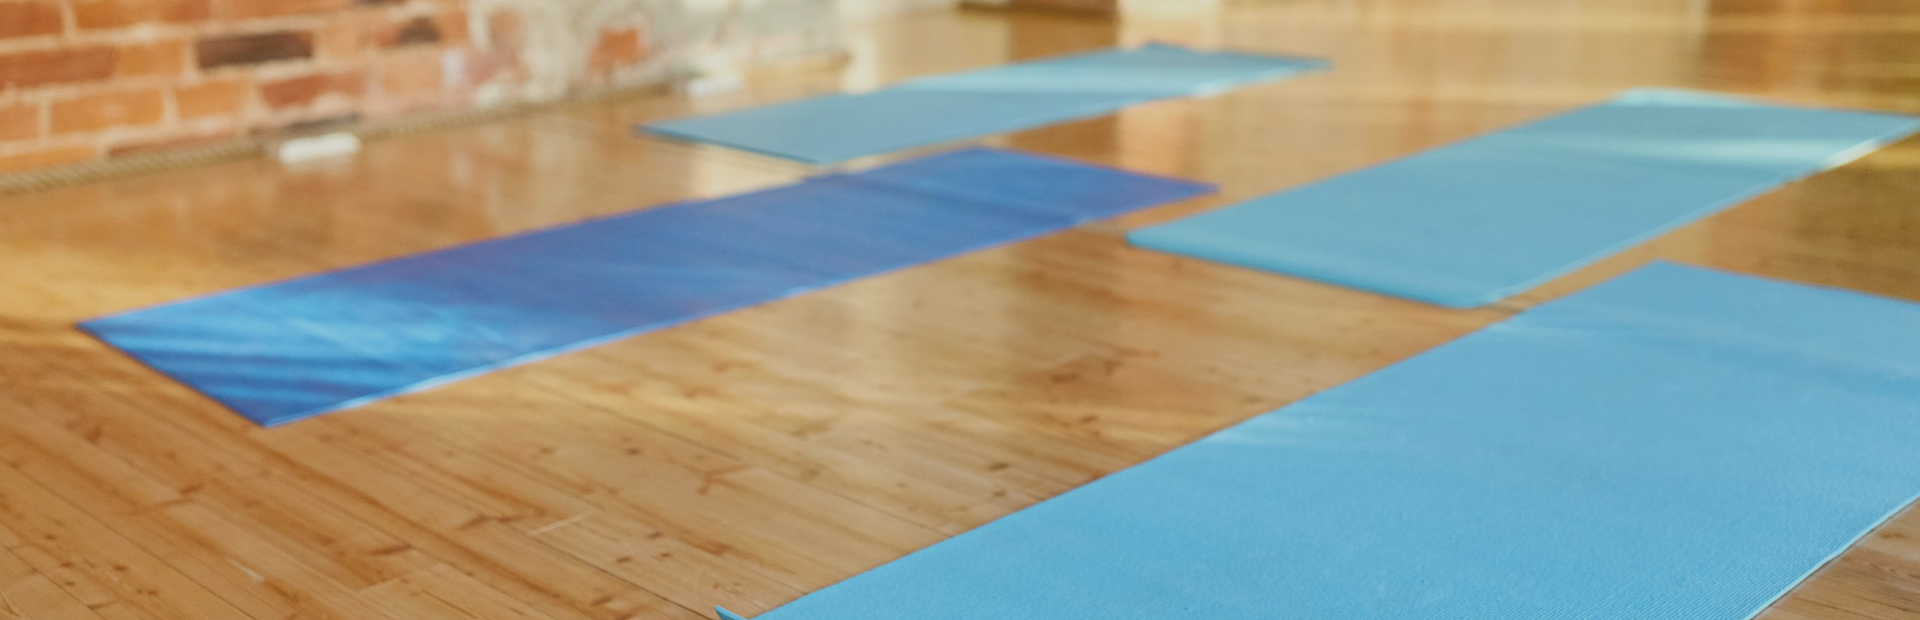 An empty yoga studio with blue mats arranged on the floor